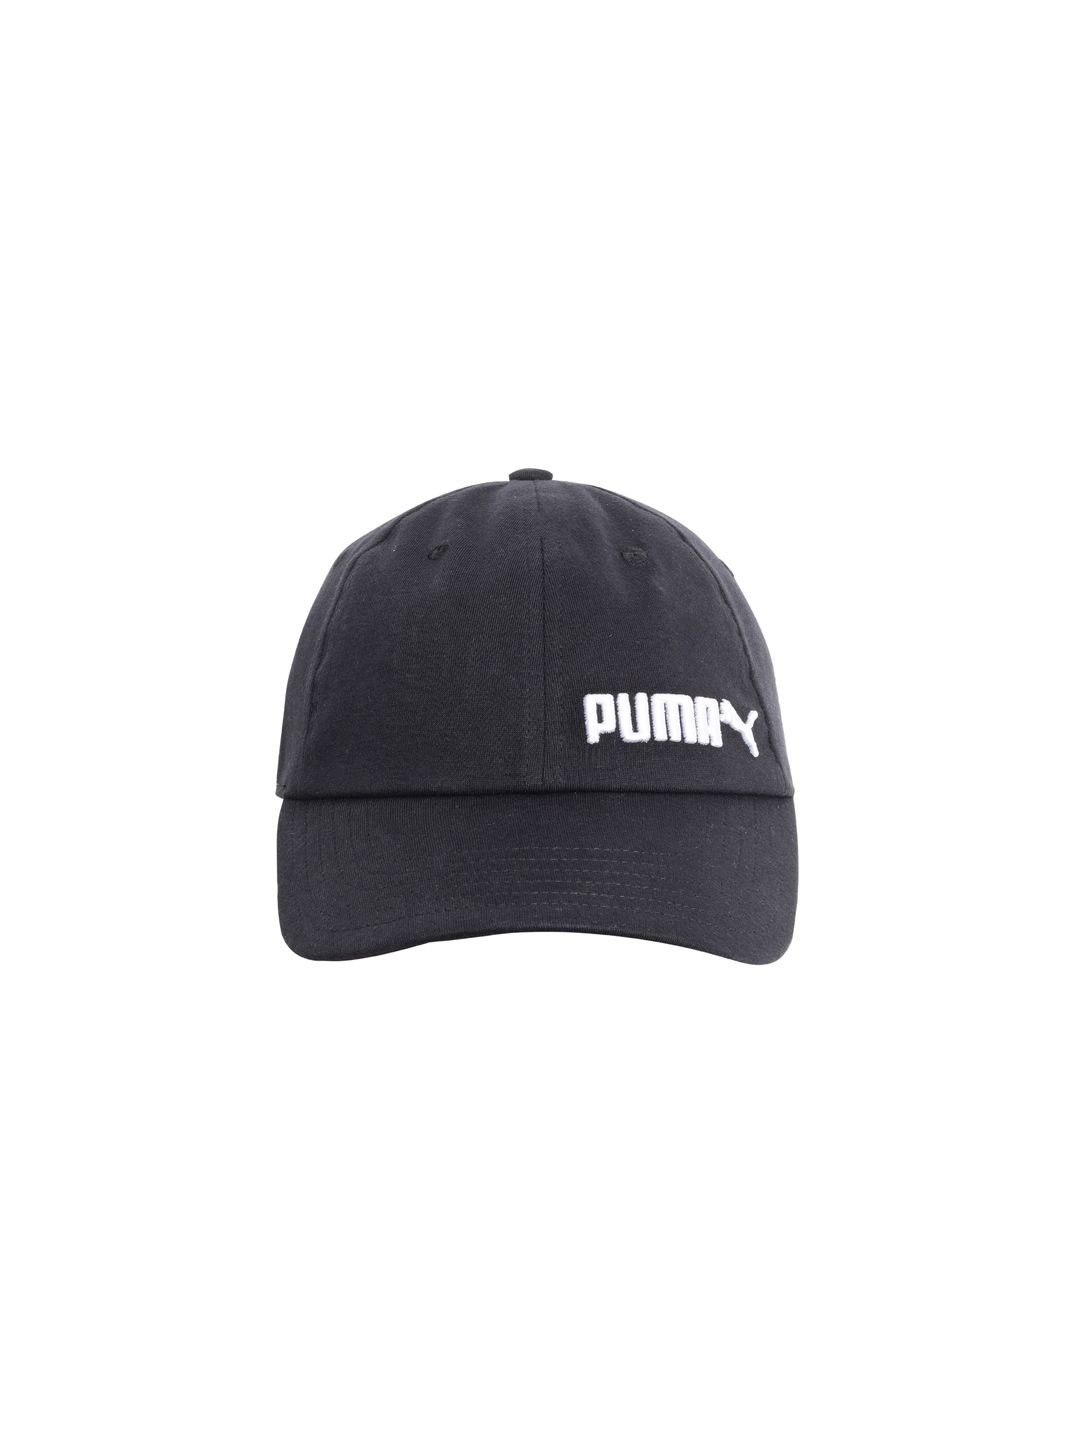 Puma Unisex Black Solid STYLE Fabric Baseball Cap Price in India